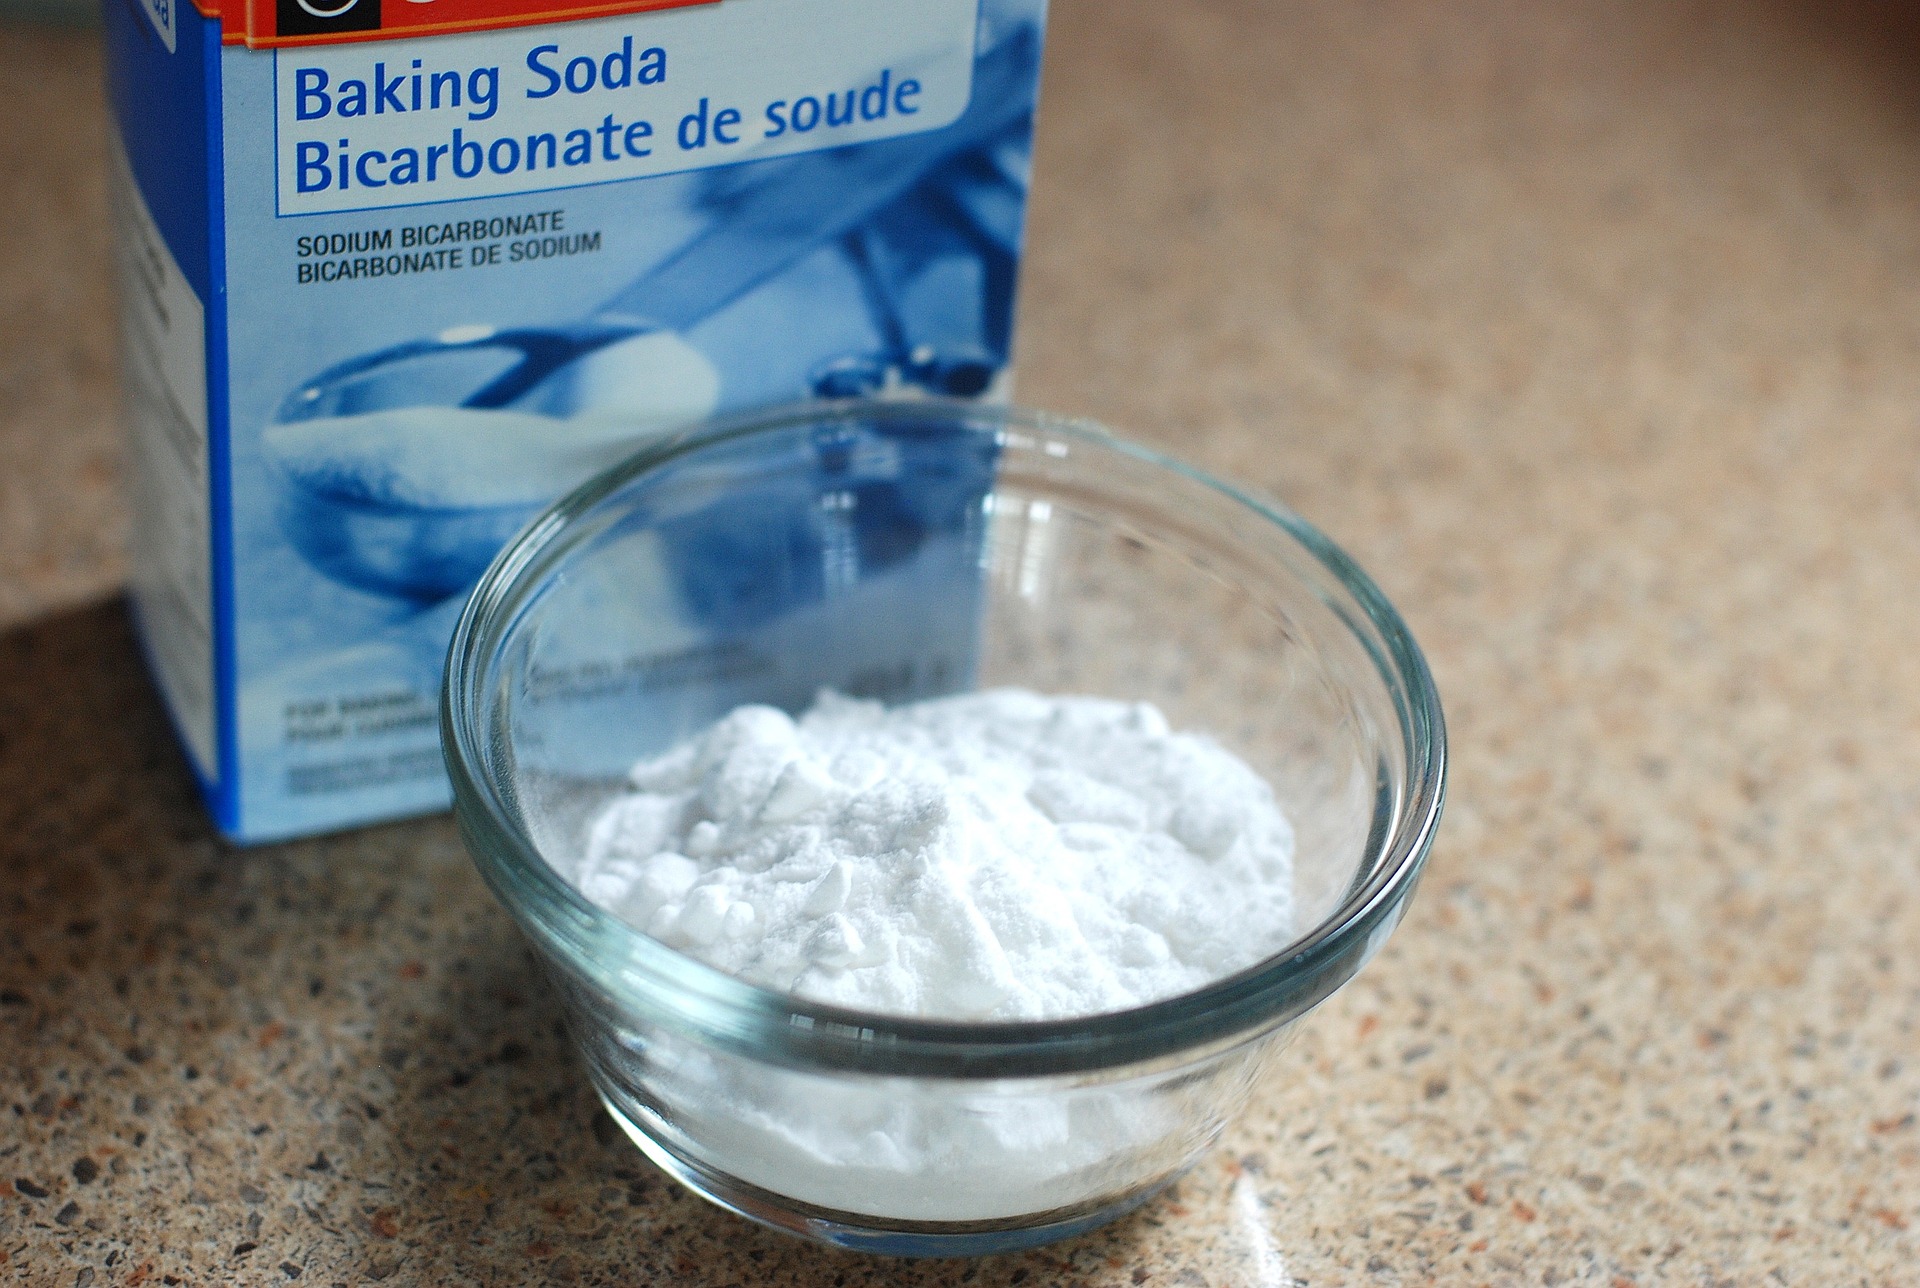 Exfoliating Your Skin With Baking Soda